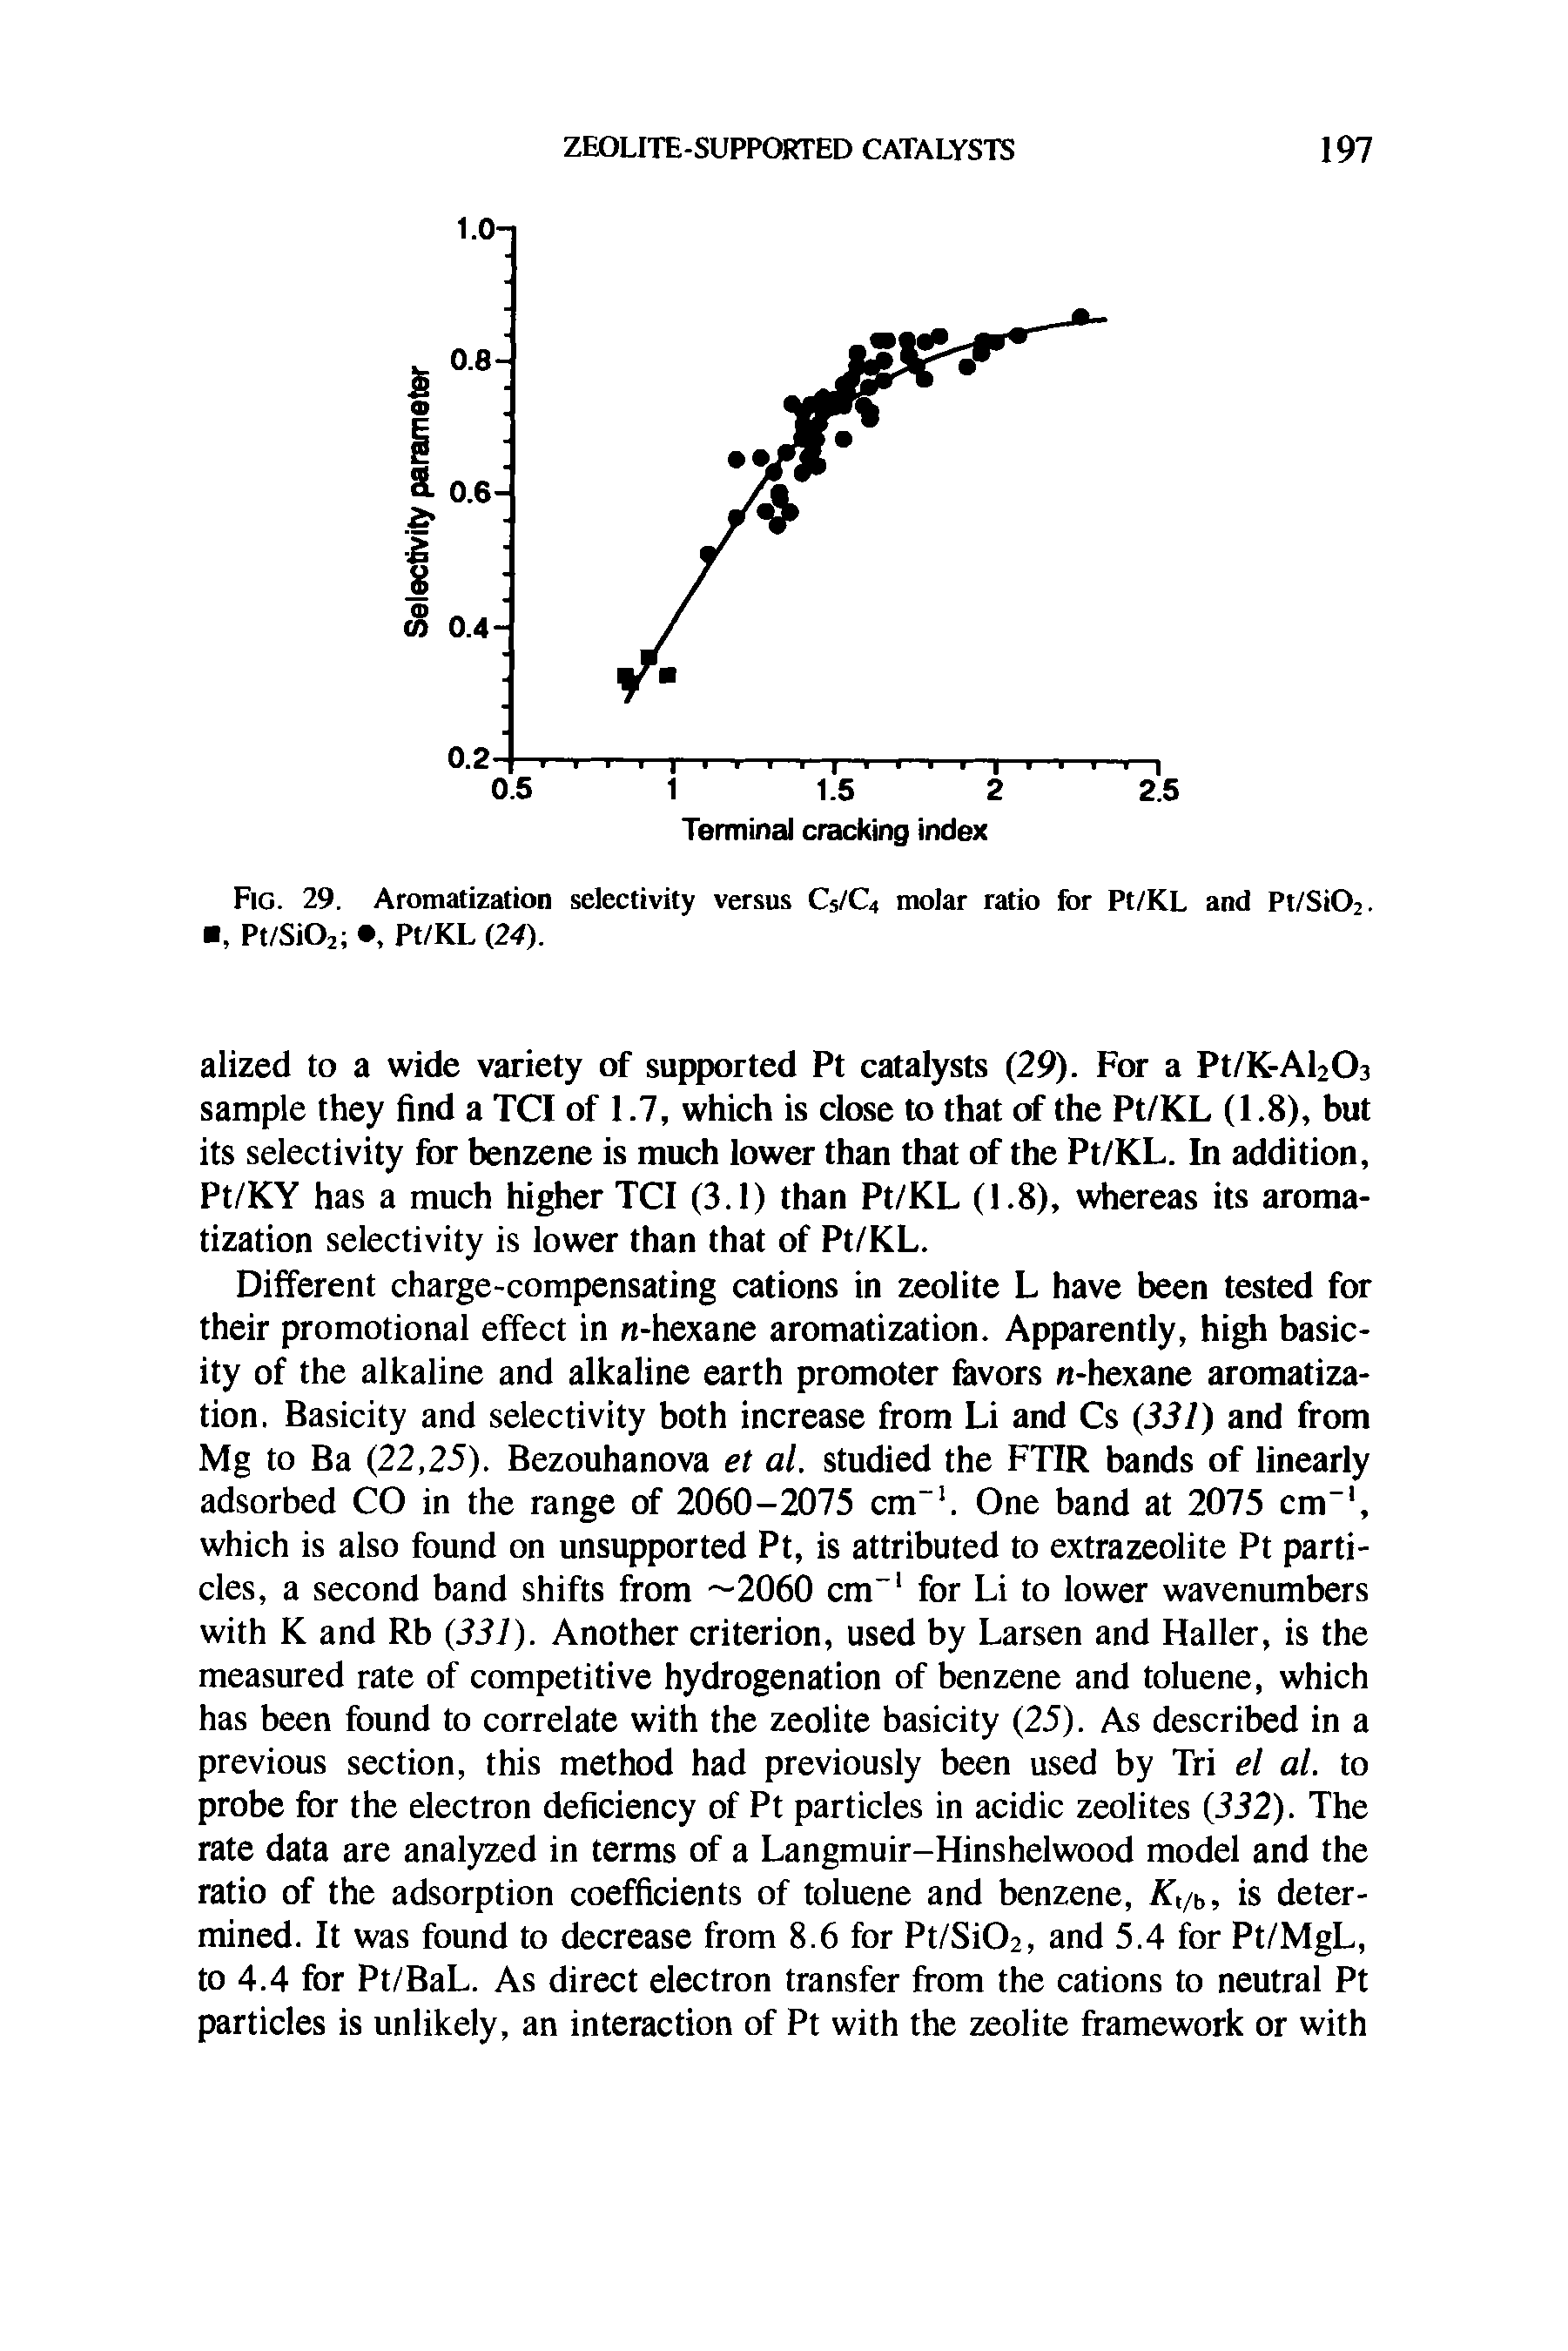 Fig. 29. Aromatization selectivity versus C5/C4 molar ratio for Pt/KL and Pt/Si02. I, Pt/SiOa , Pt/KL (24).